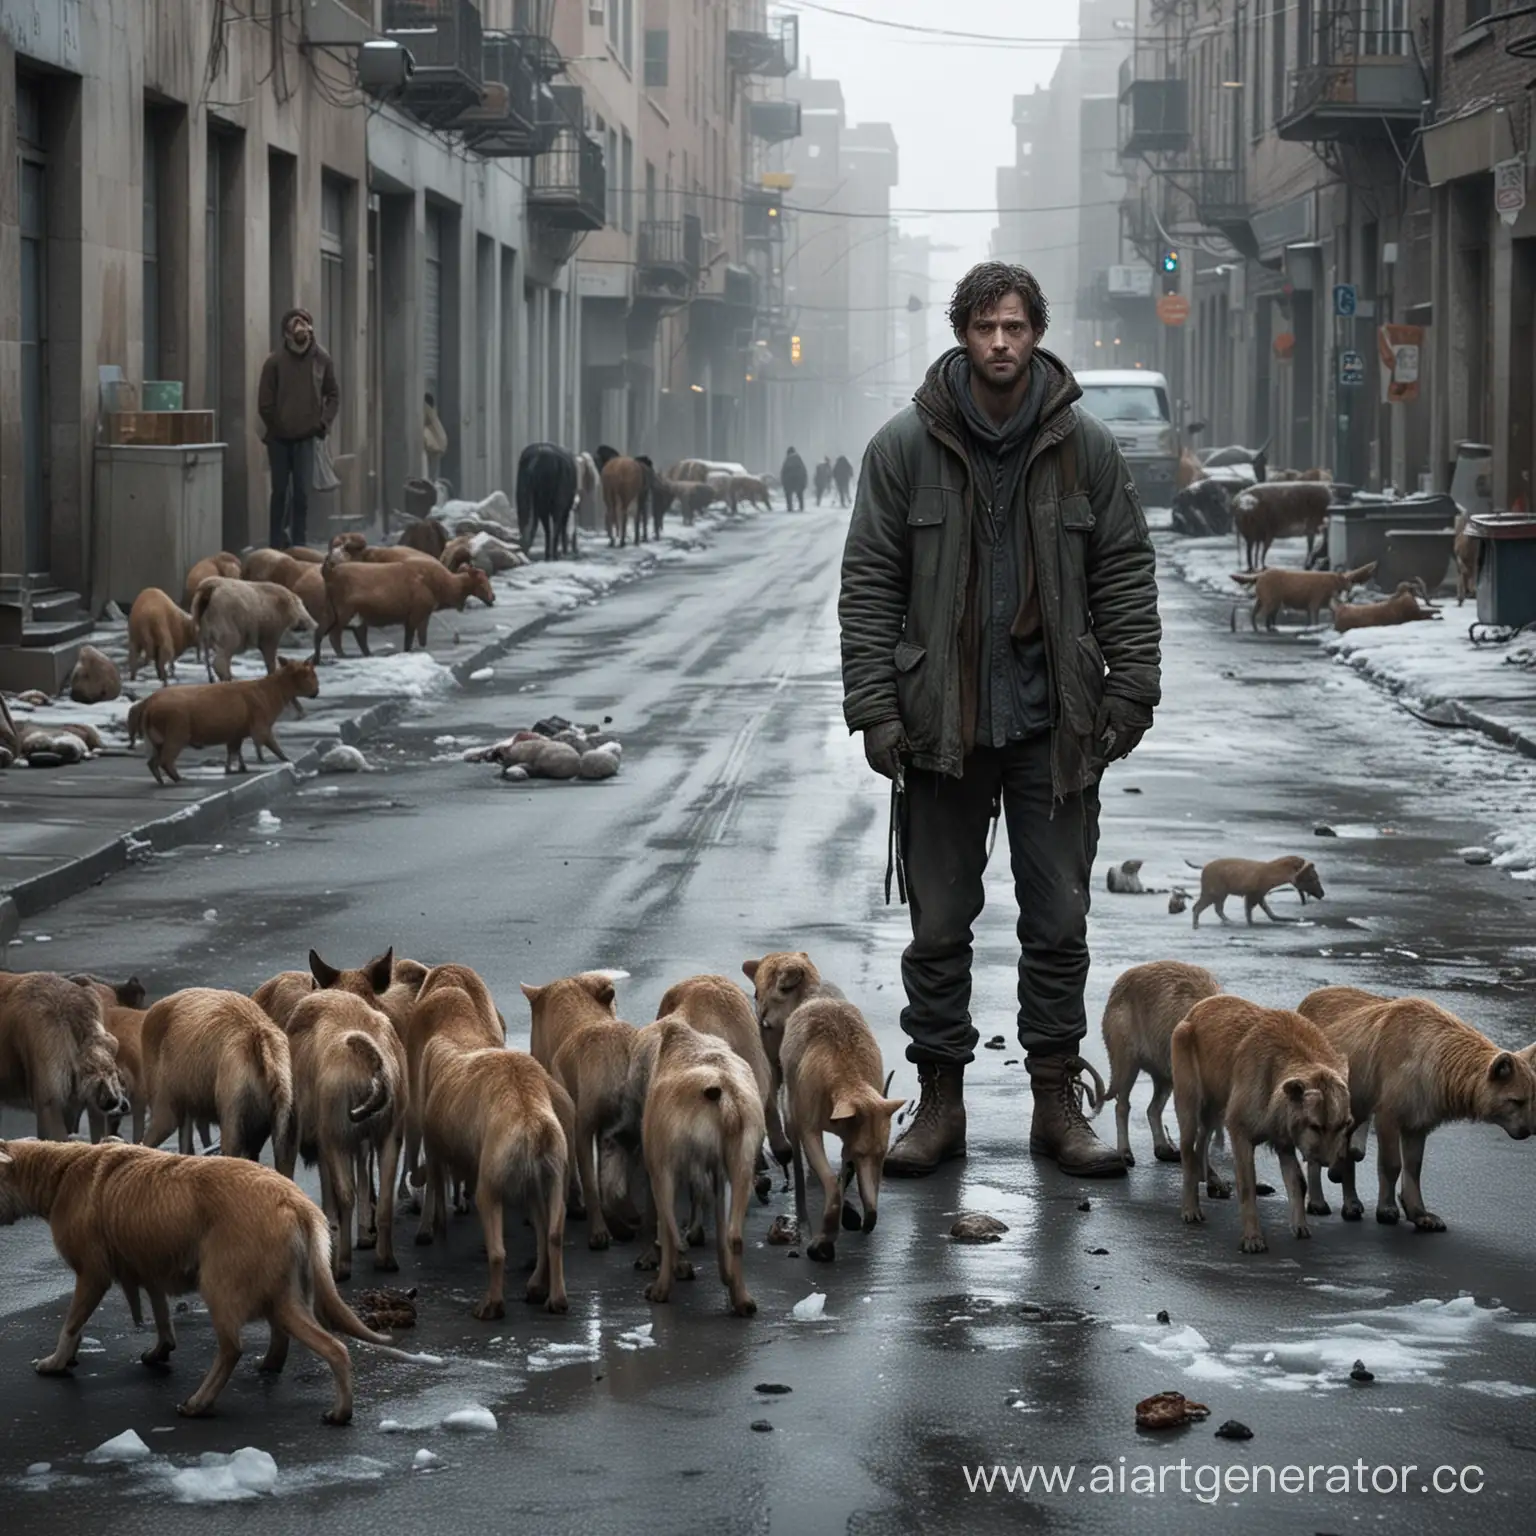 Urban-Hero-Feeding-Homeless-Animals-on-City-Street